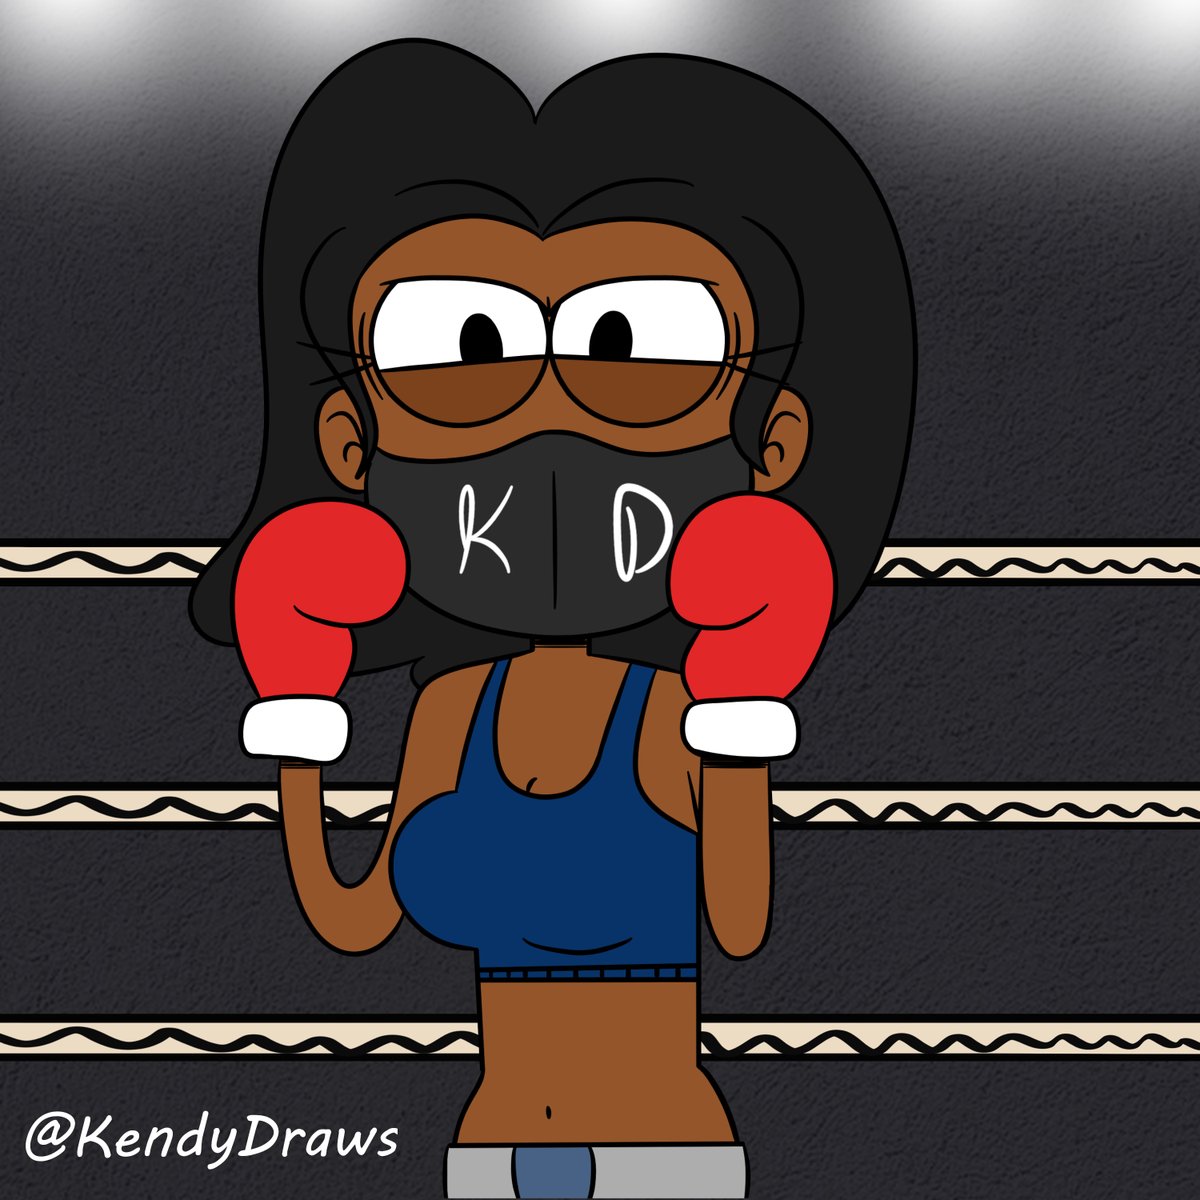 OC Kenlyn Boxer

Left: My style
Right: The Loud House style

#KendyDraws #trinidadartist #triniartist #trinidad #art #arte #artist #OC #originalart #Original #artist #artistontwittter #OCKenlyn #Kenlyn #genderbend #drawings #boxing #ボクシング #女子ボクシング